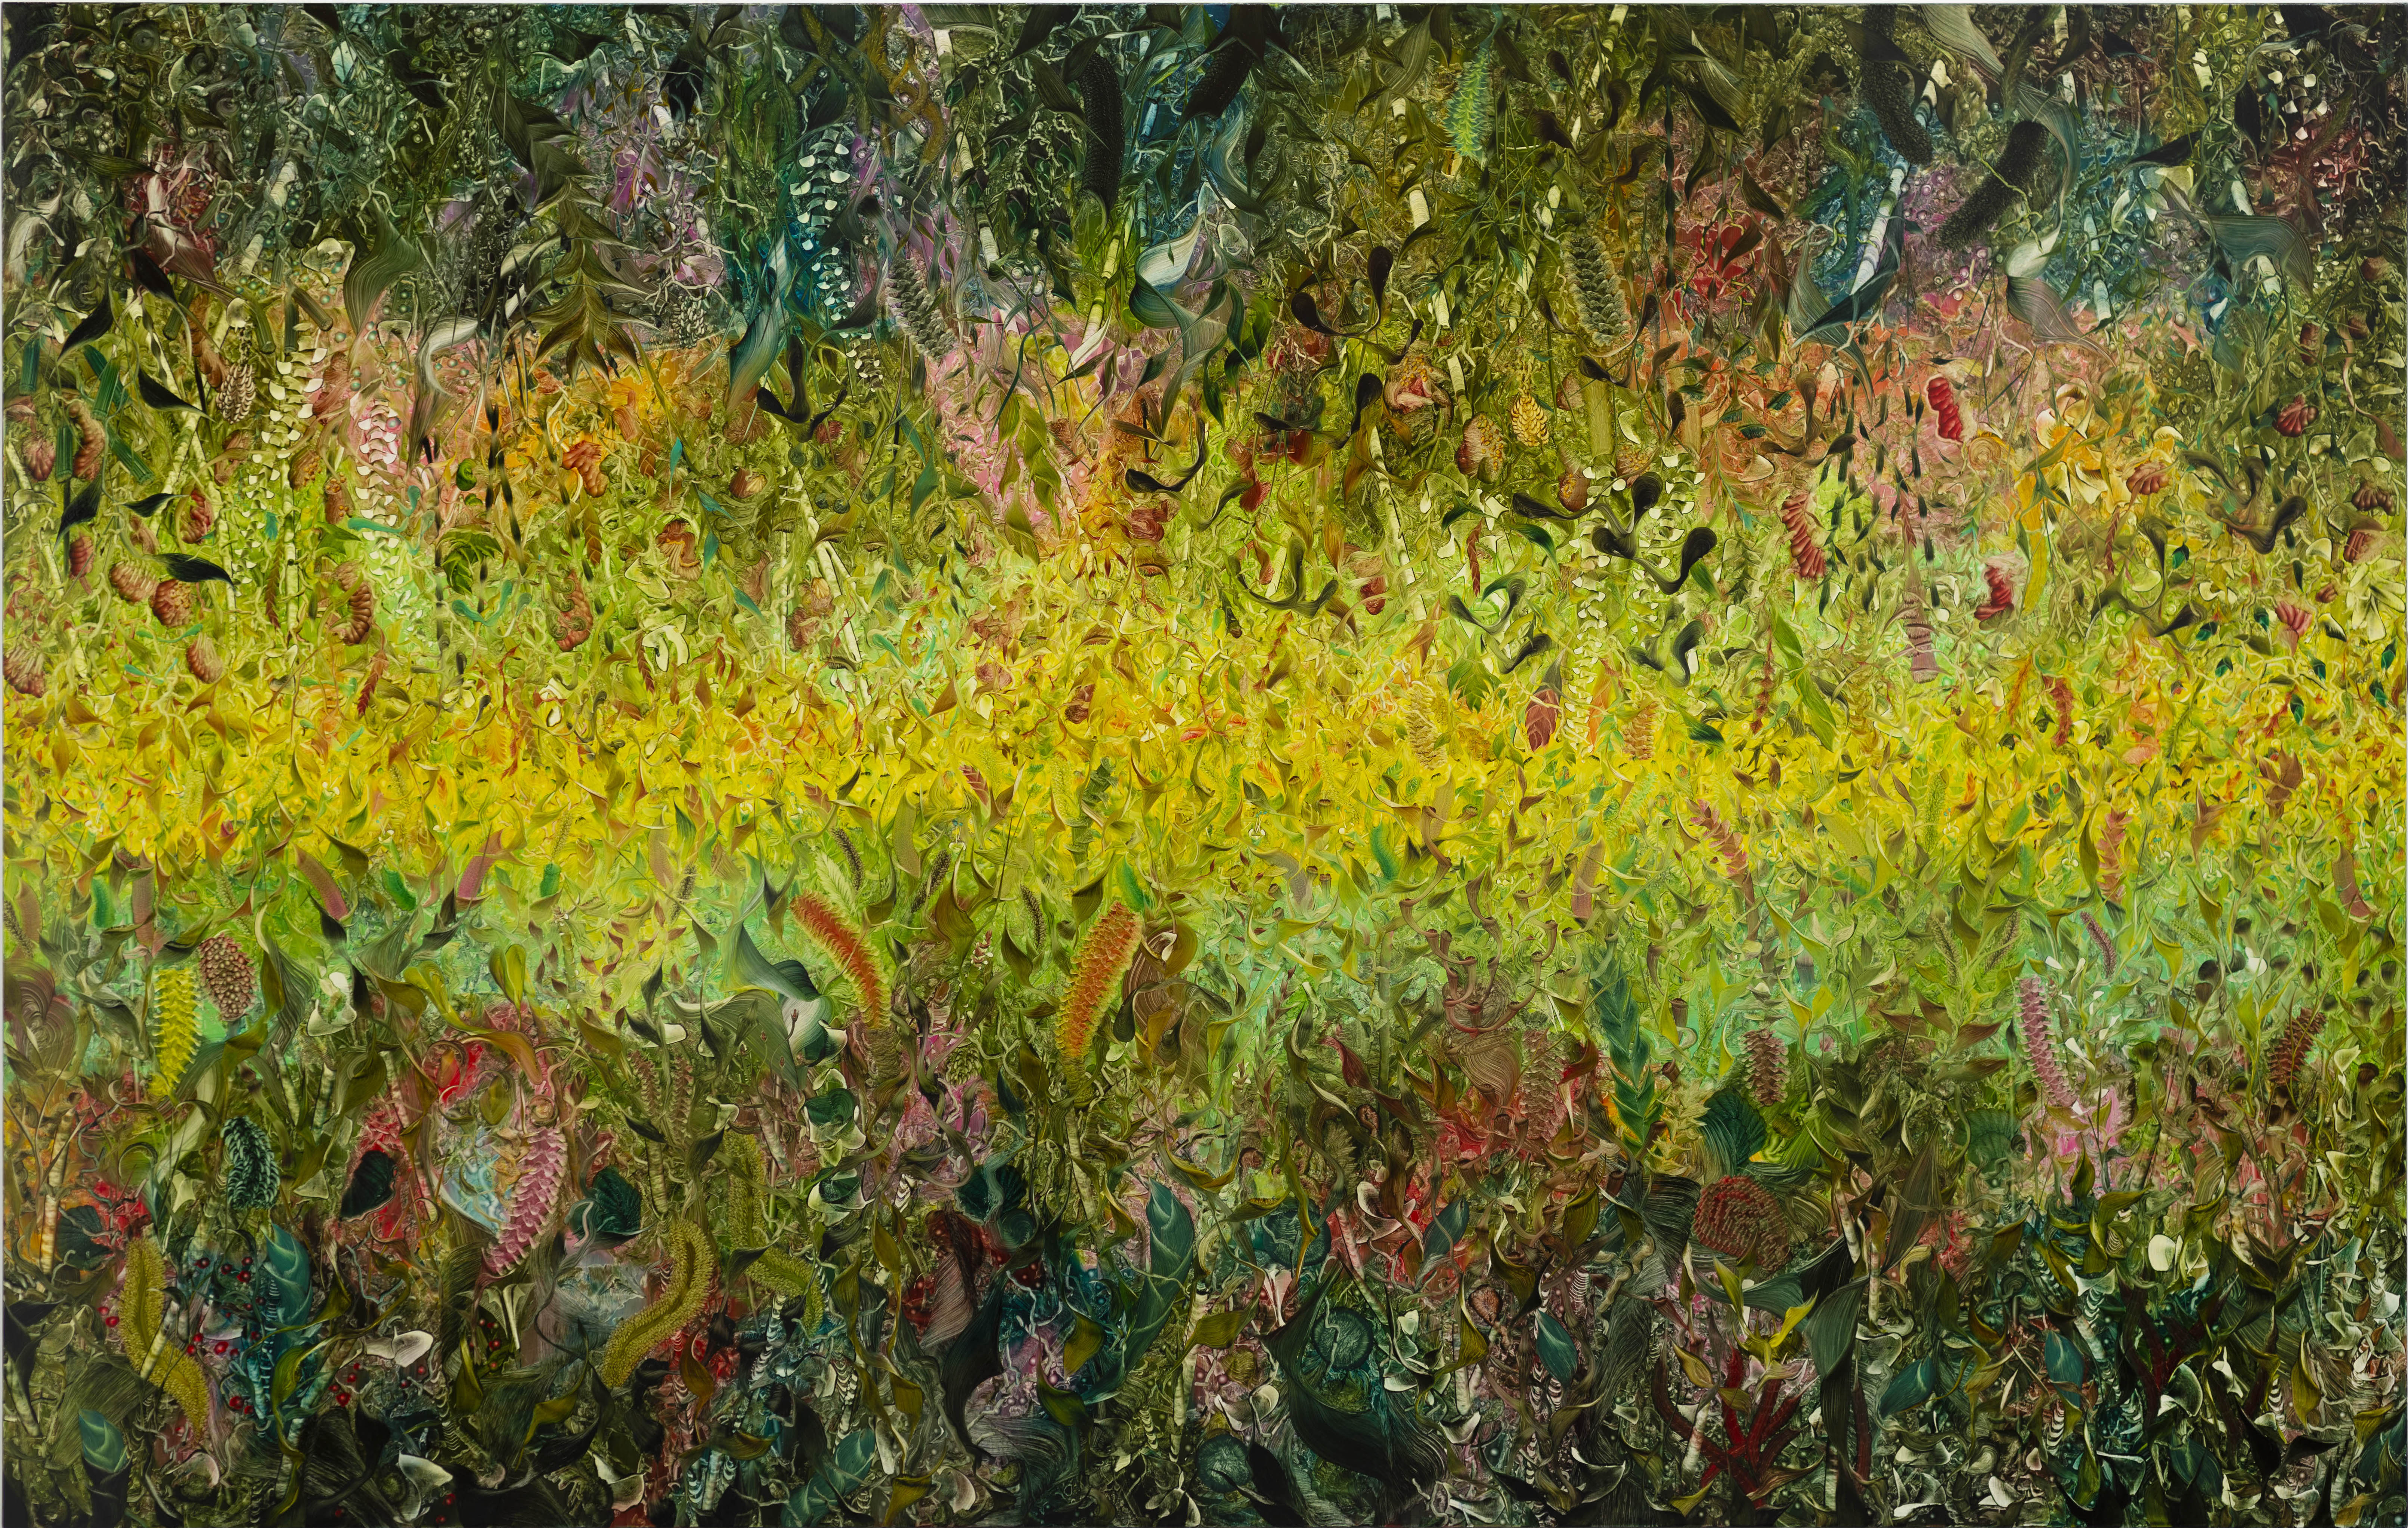 Andy Harper, Parallel Botany, oil on linen, 140 x 220 cm, 2020